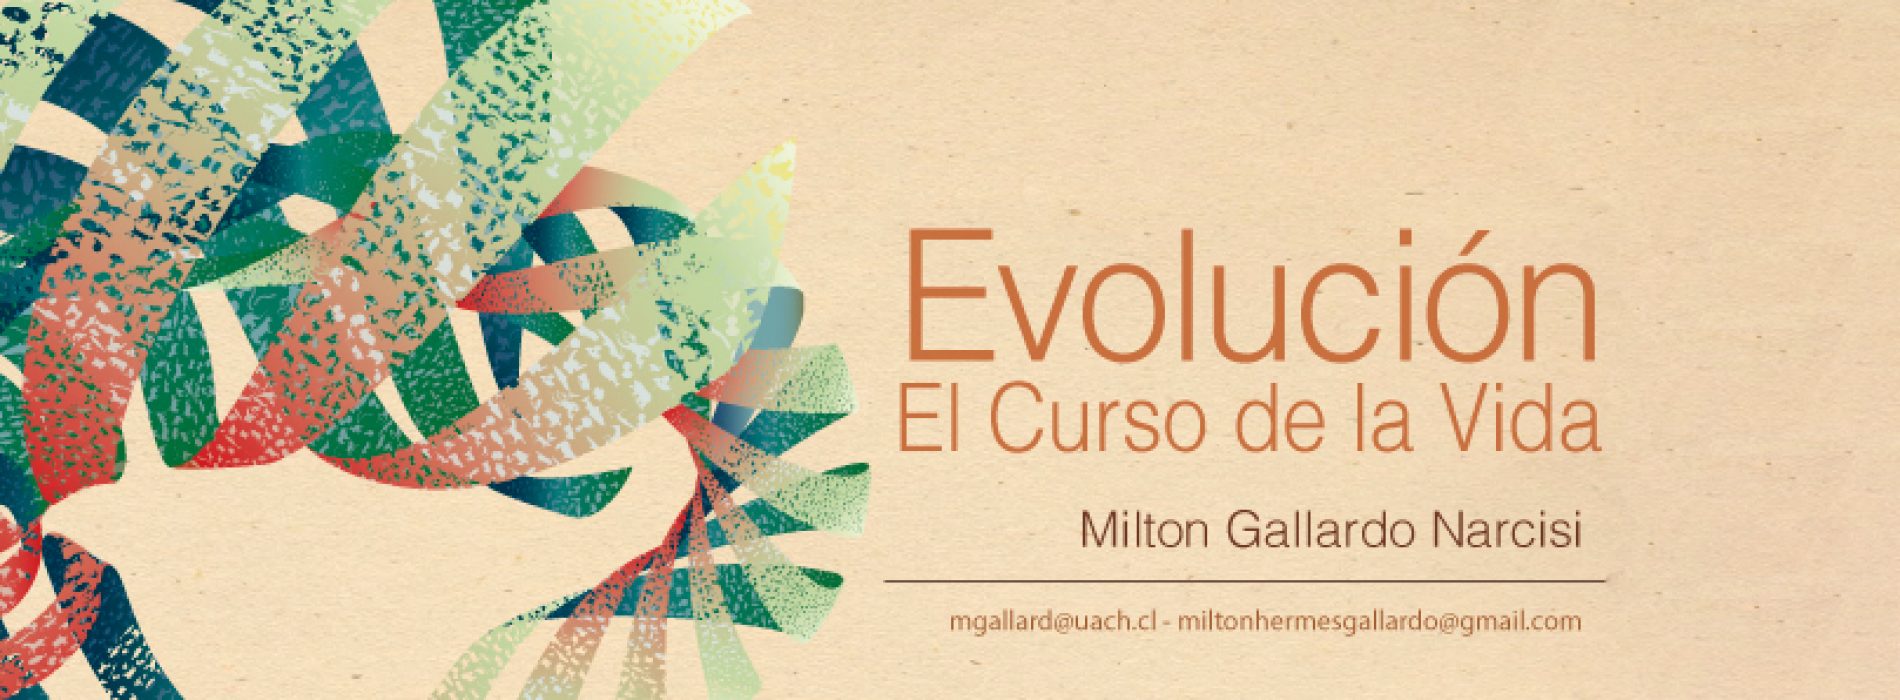 Second Edition in pdf of the book by Professor Milton Gallardo, "evolution. The course of life"